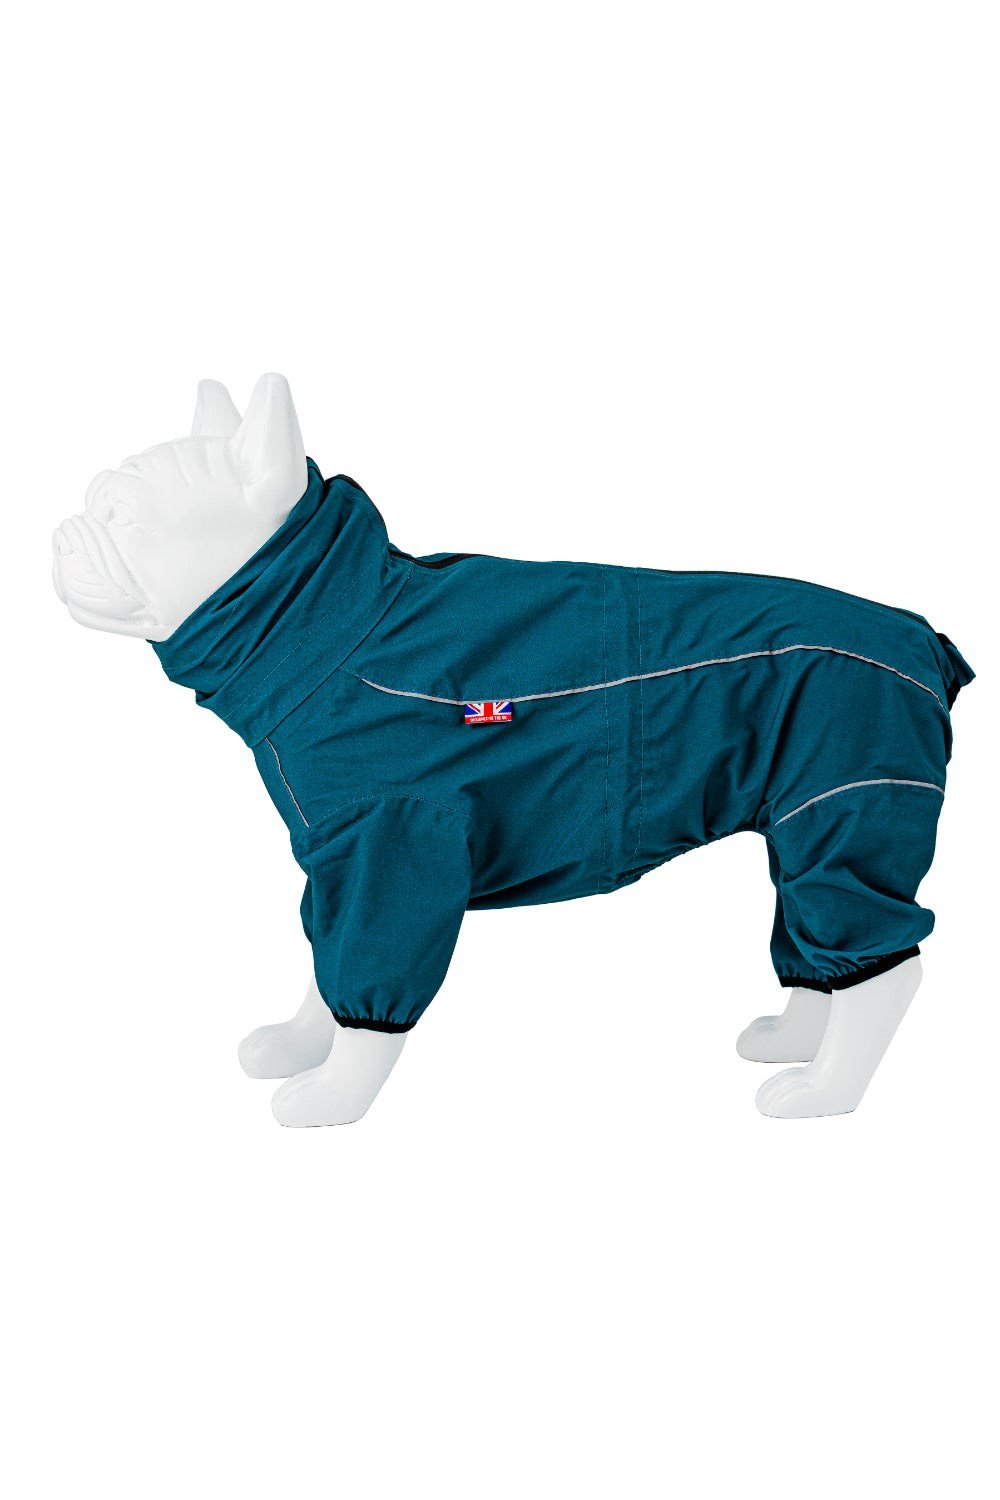 Reflective Protective Overalls Dog Jacket Coat -